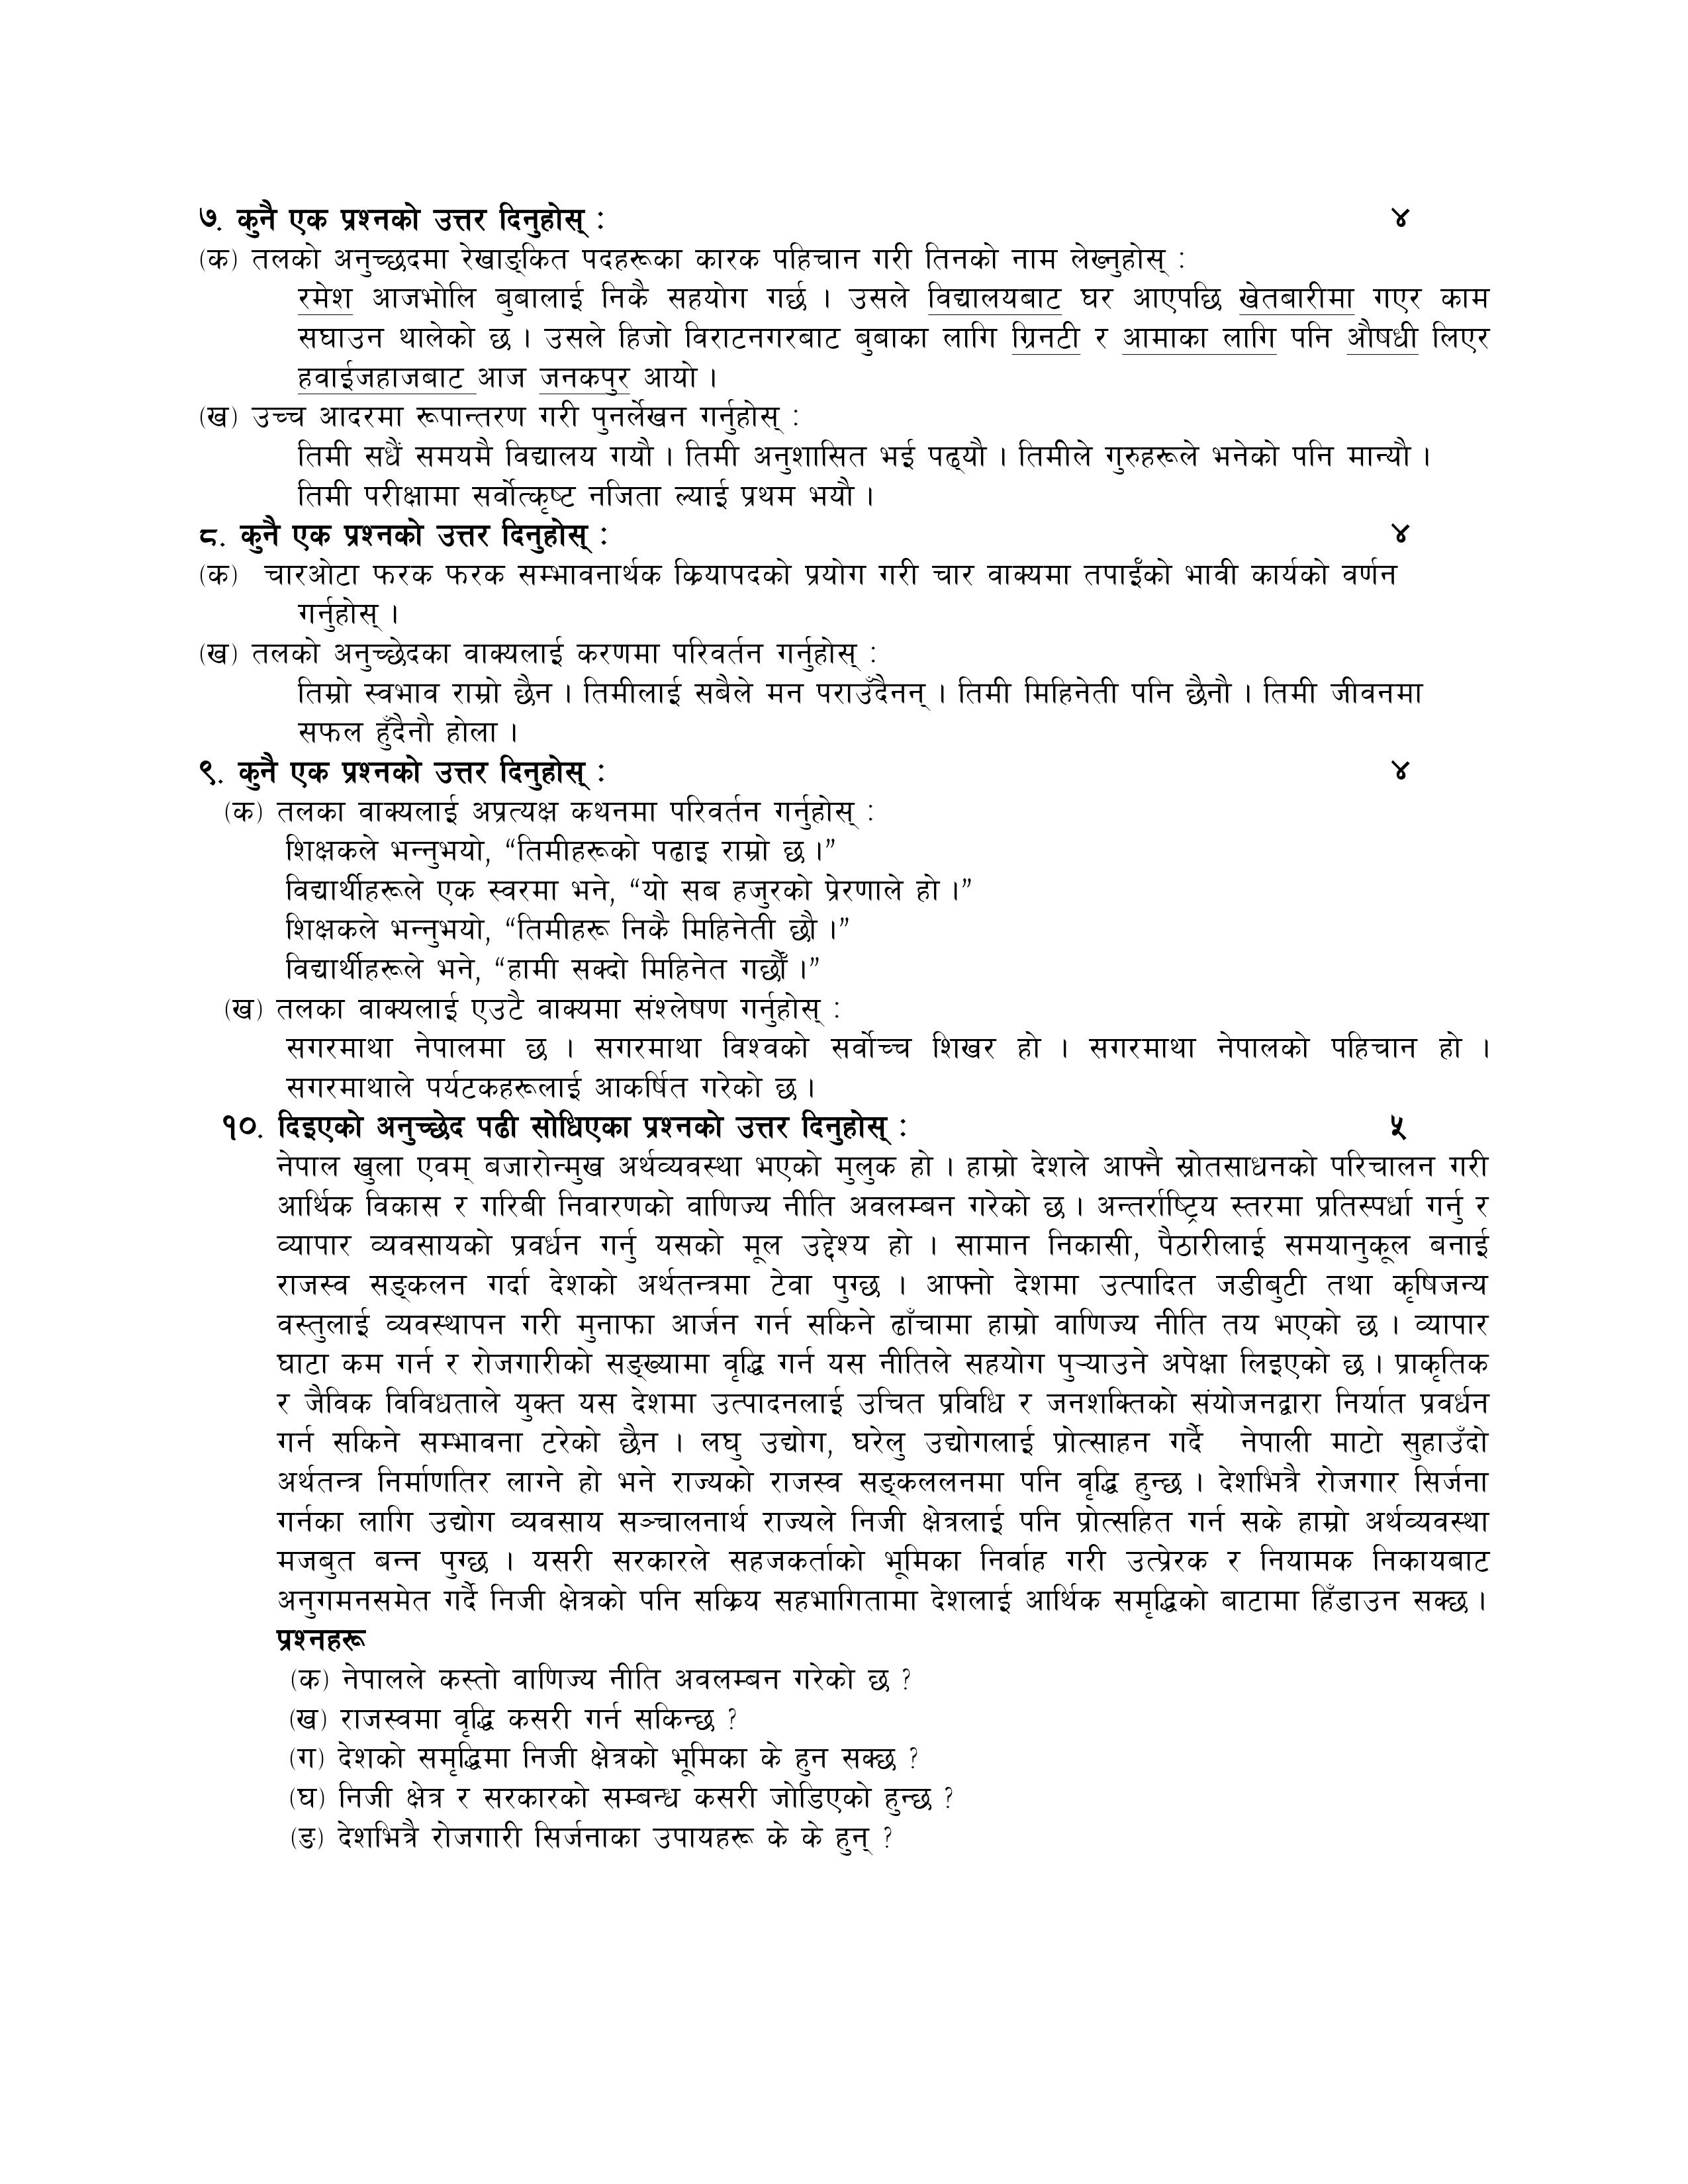 Com. Nepali Model Question: NEB Class 12 Board Exam 2079/80